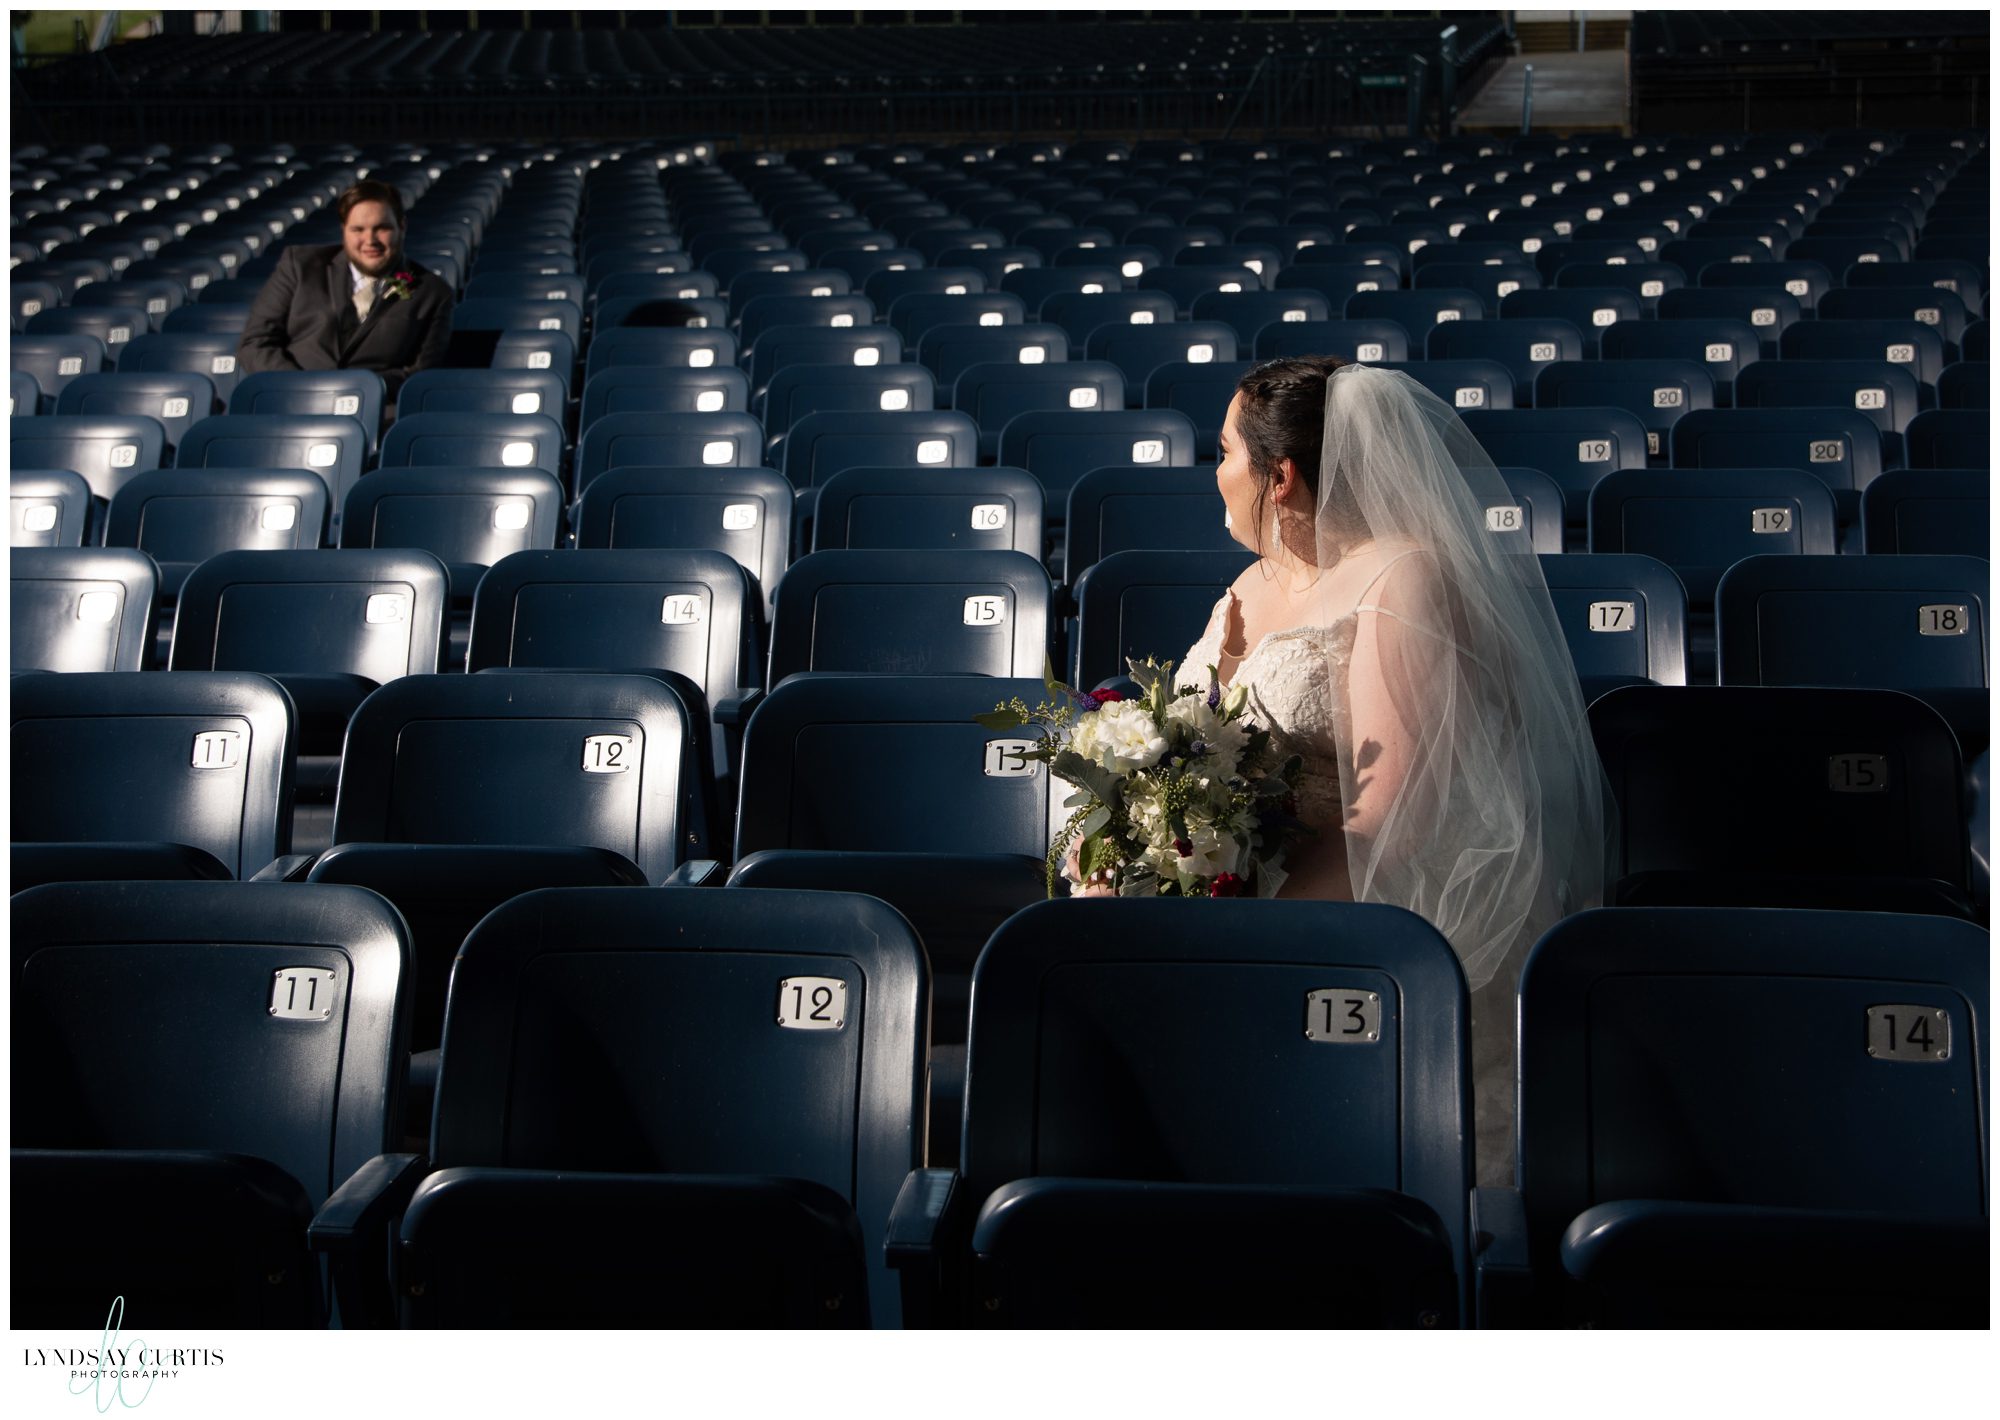 Virginia Beach wedding photographer Lyndsay Curtis Photography - Fun sports themed bride and groom portrait in bleacher seats